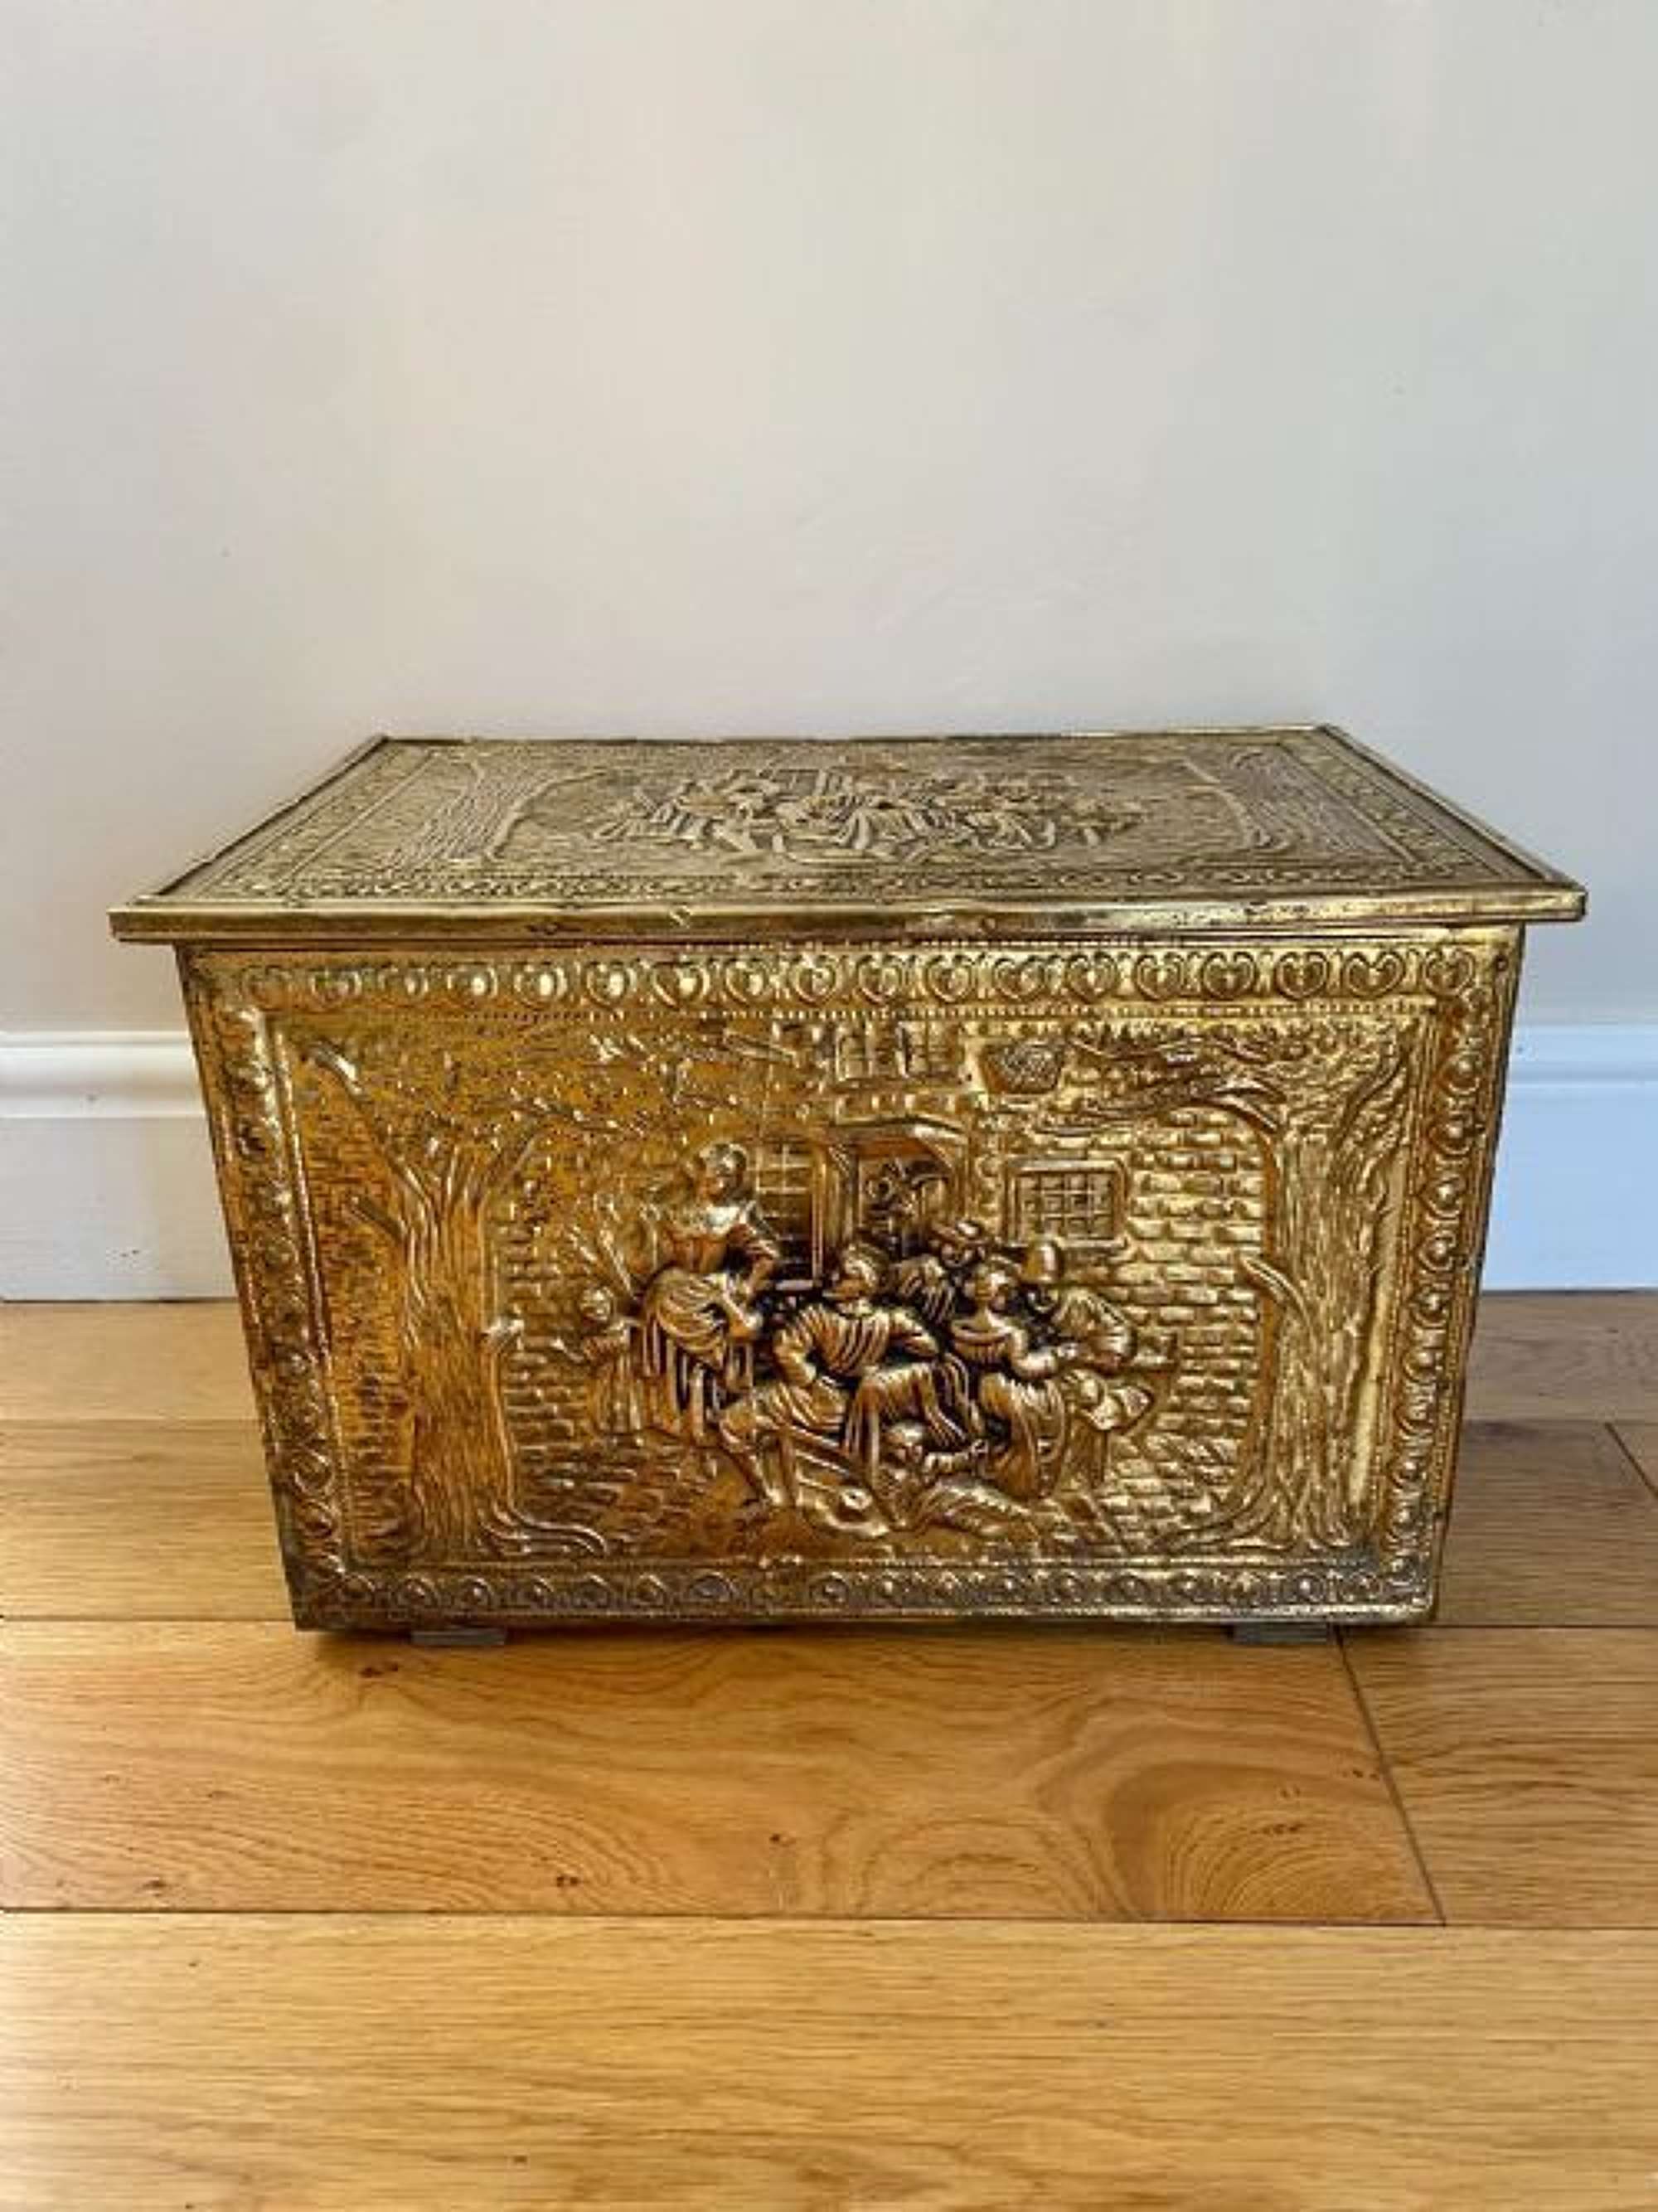 Ornate Antique Quality Brass Coal Box